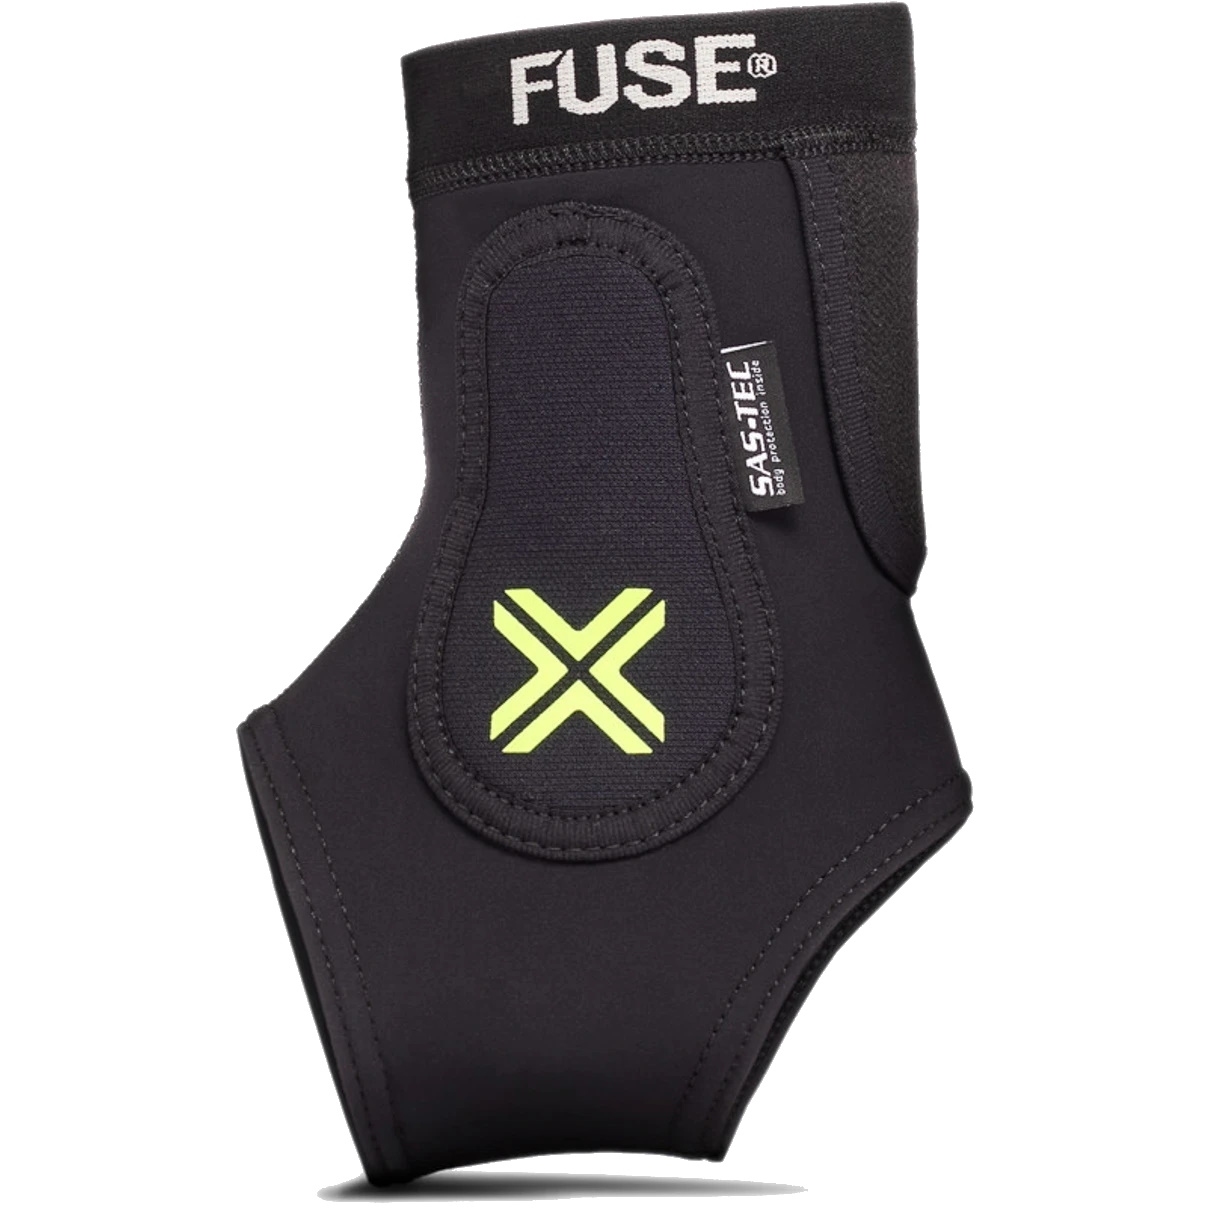 Productfoto van Fuse Omega Ankle Protector - black